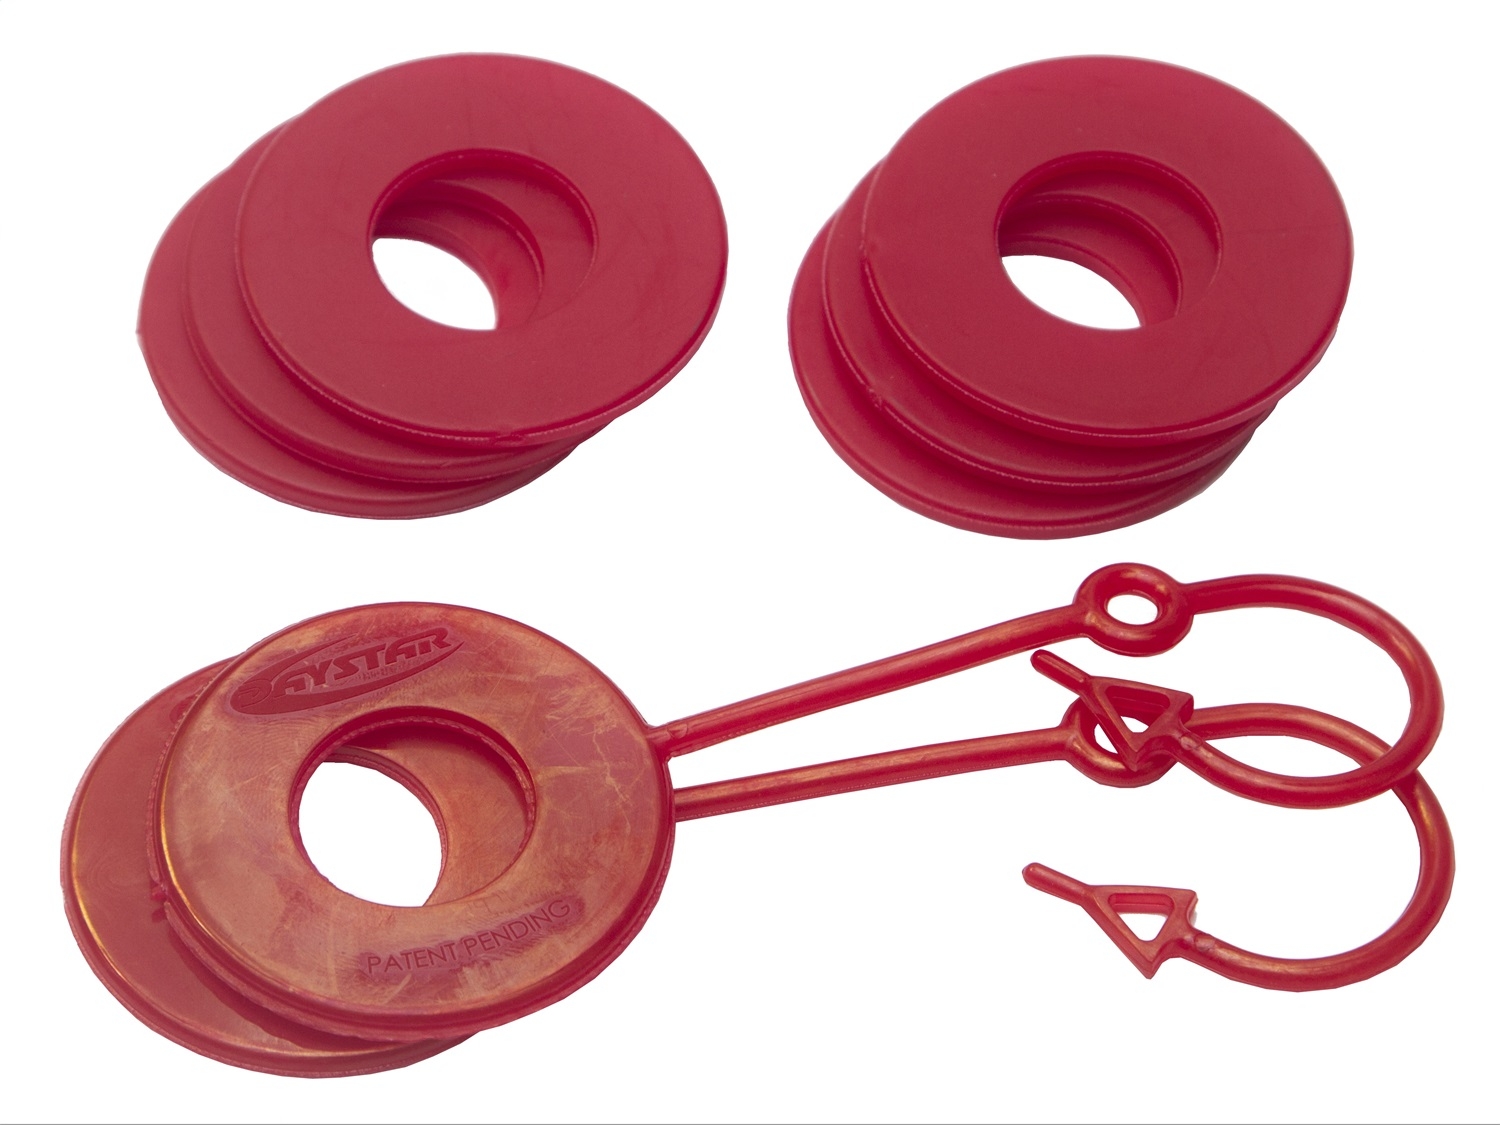 Daystar D Ring Isolator Washer Locker Kit 2 Locking Washers And 8 Non-Locking Washers Red,